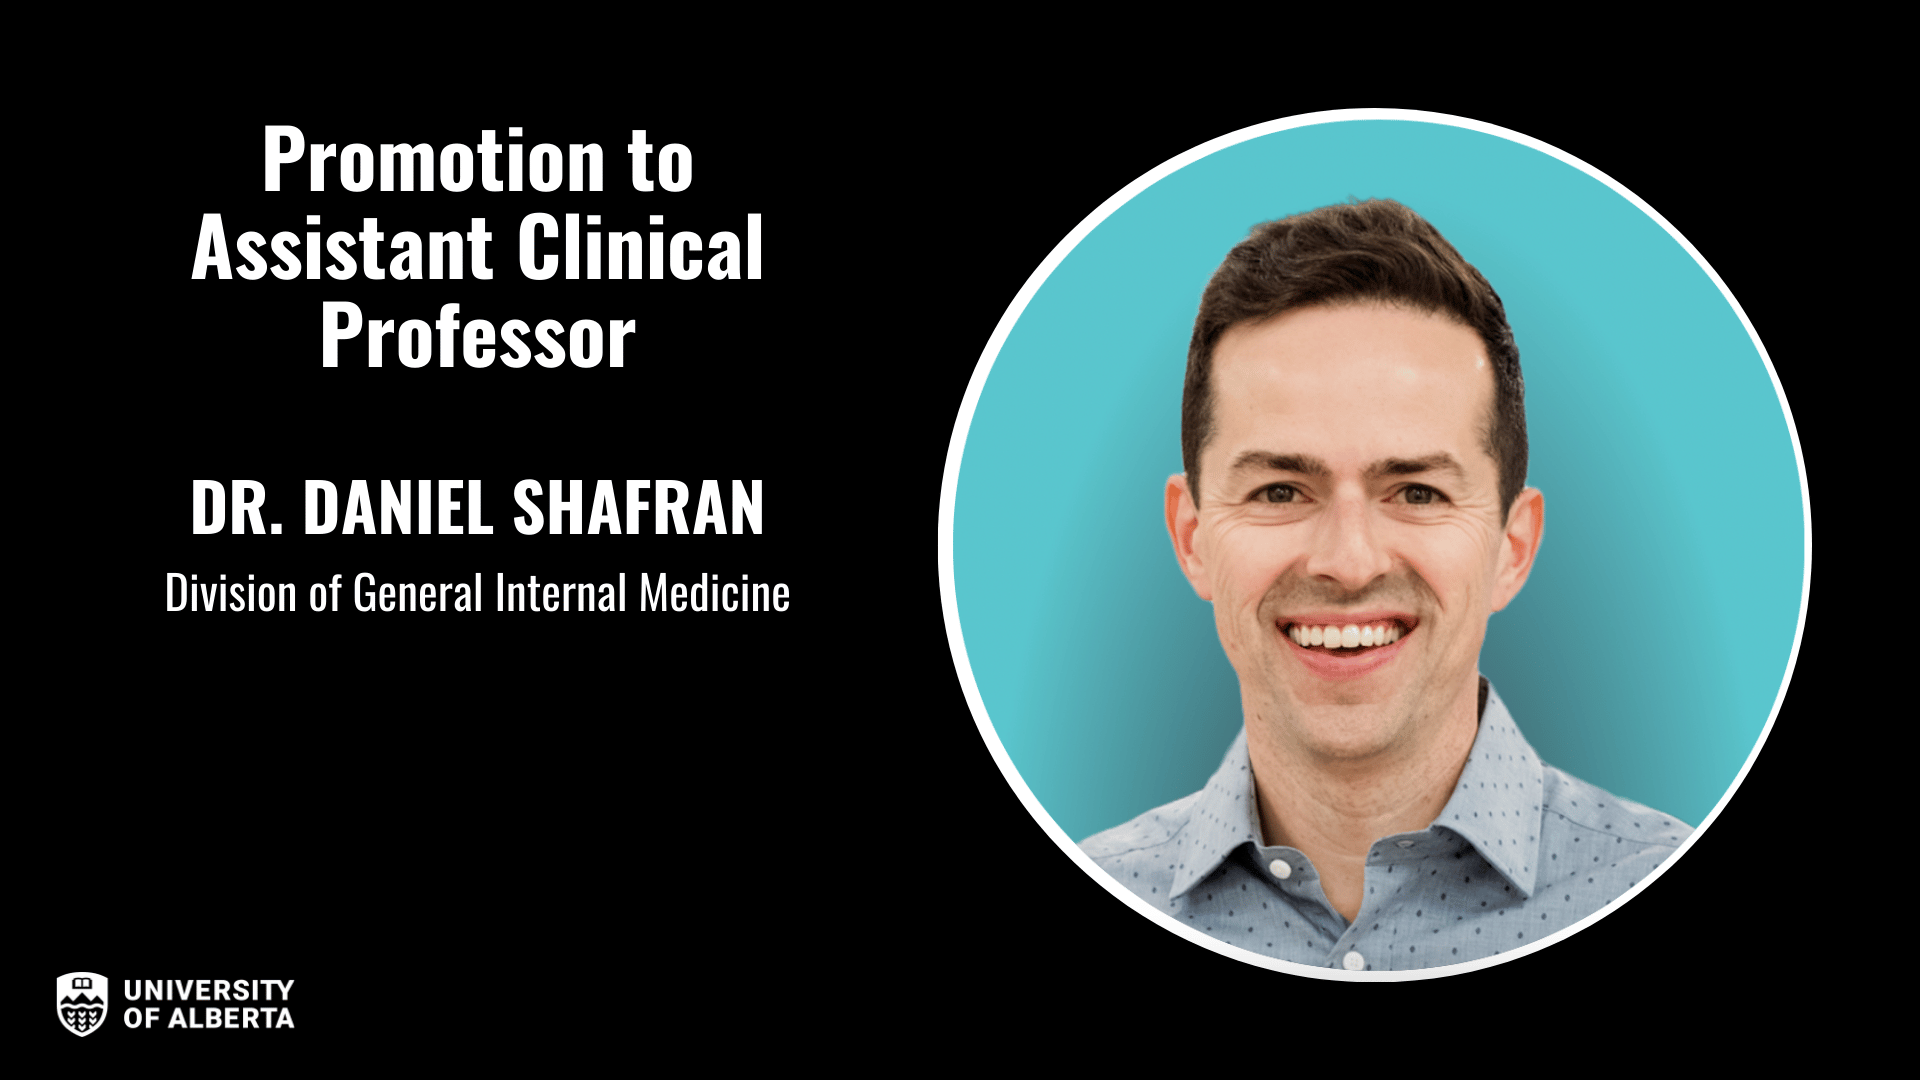 Dr. Daniel Shafran